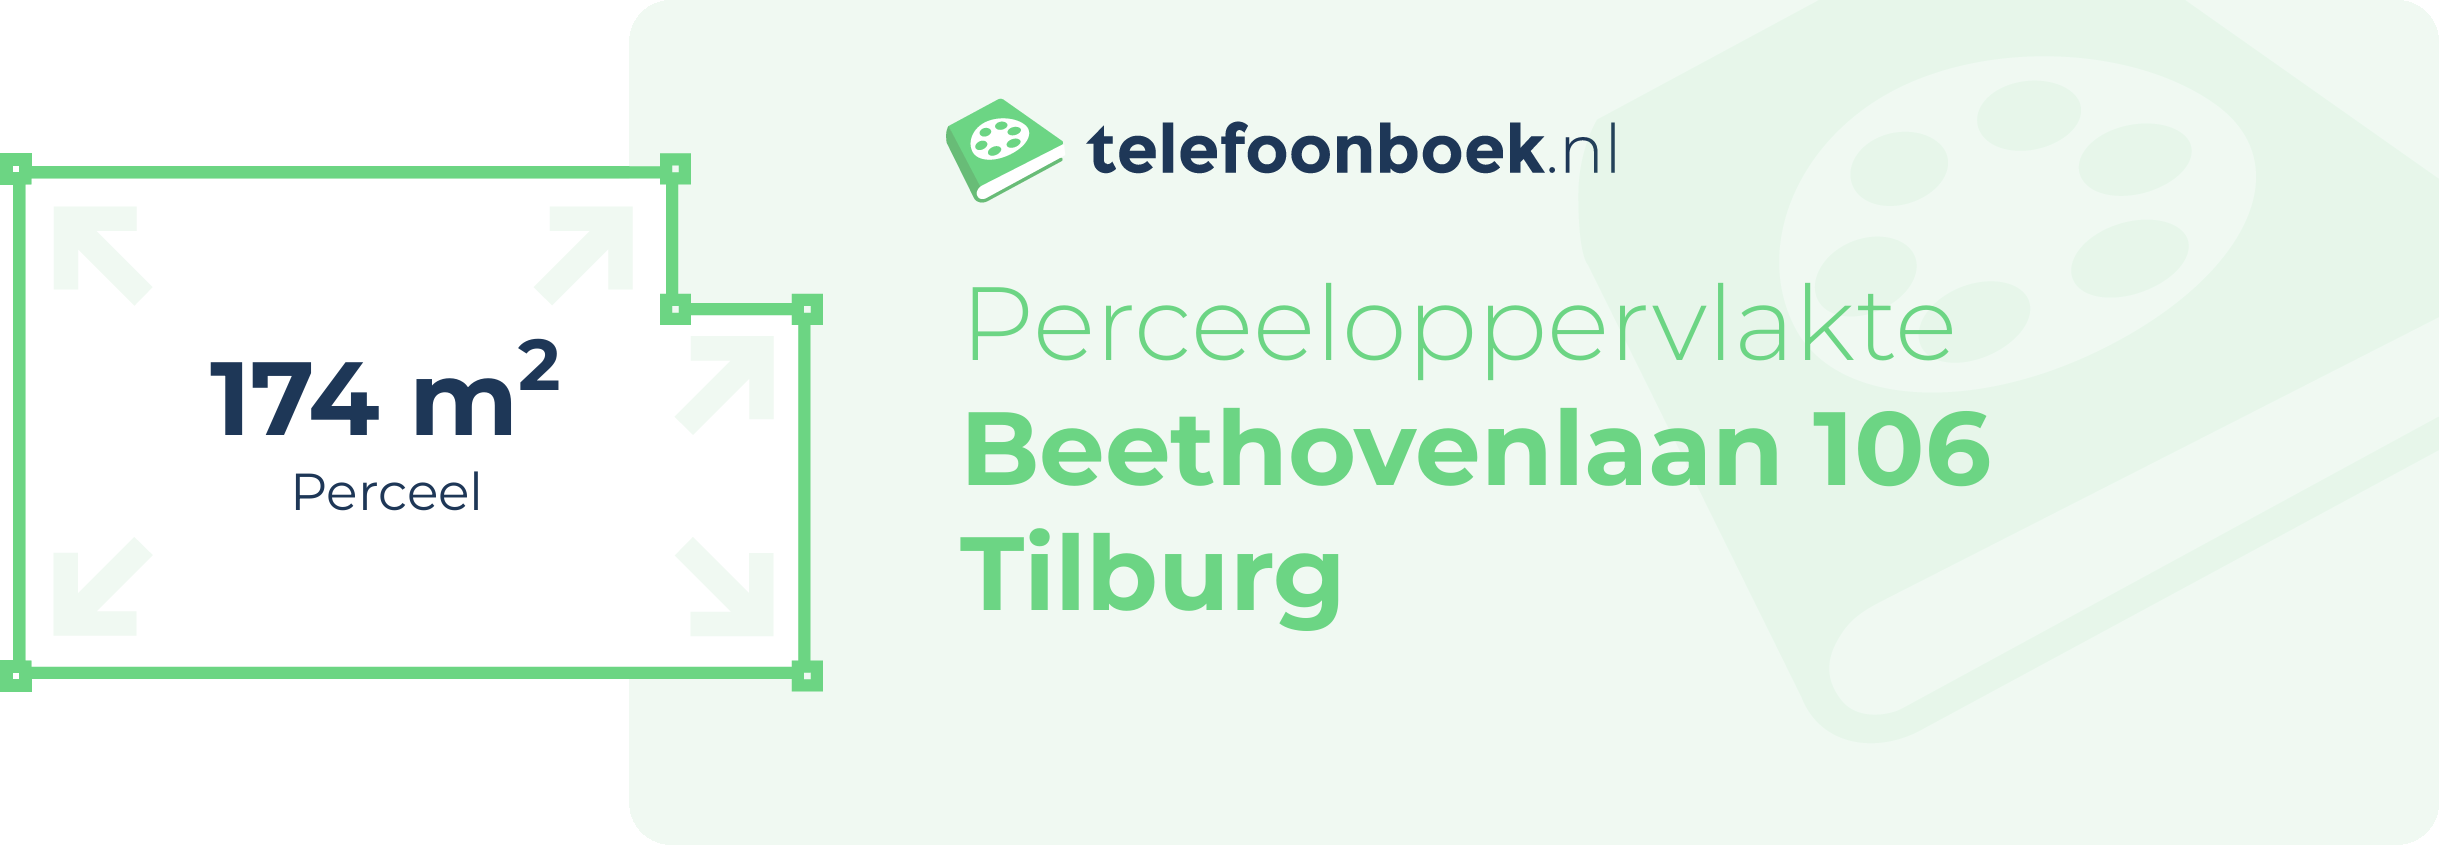 Perceeloppervlakte Beethovenlaan 106 Tilburg